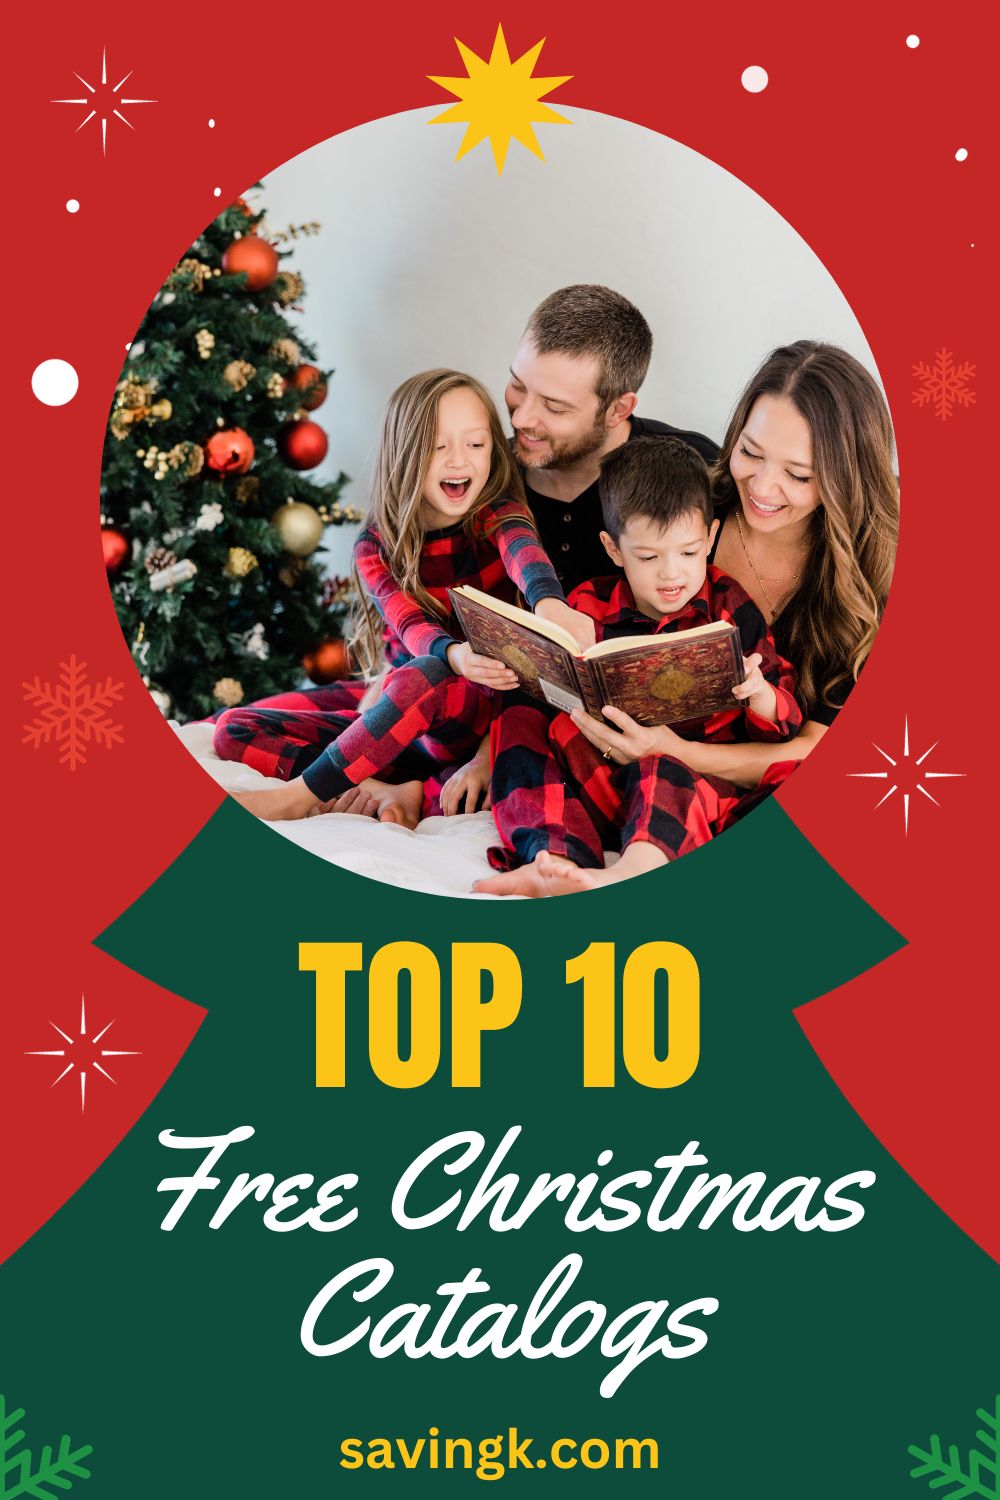 Top 10 Free Christmas Catalogs